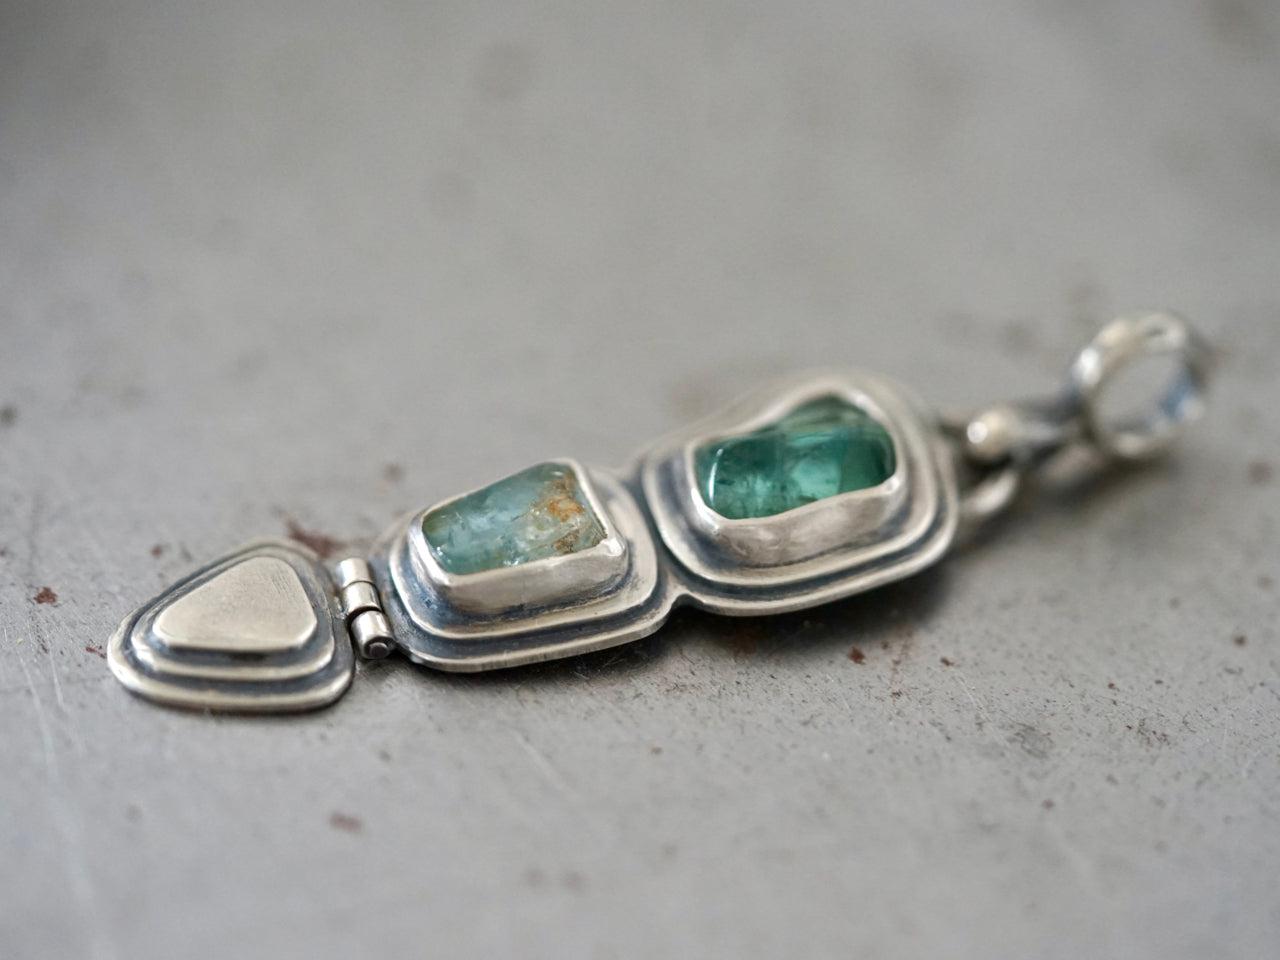 Aquamarine and tourmaline hinged pendant